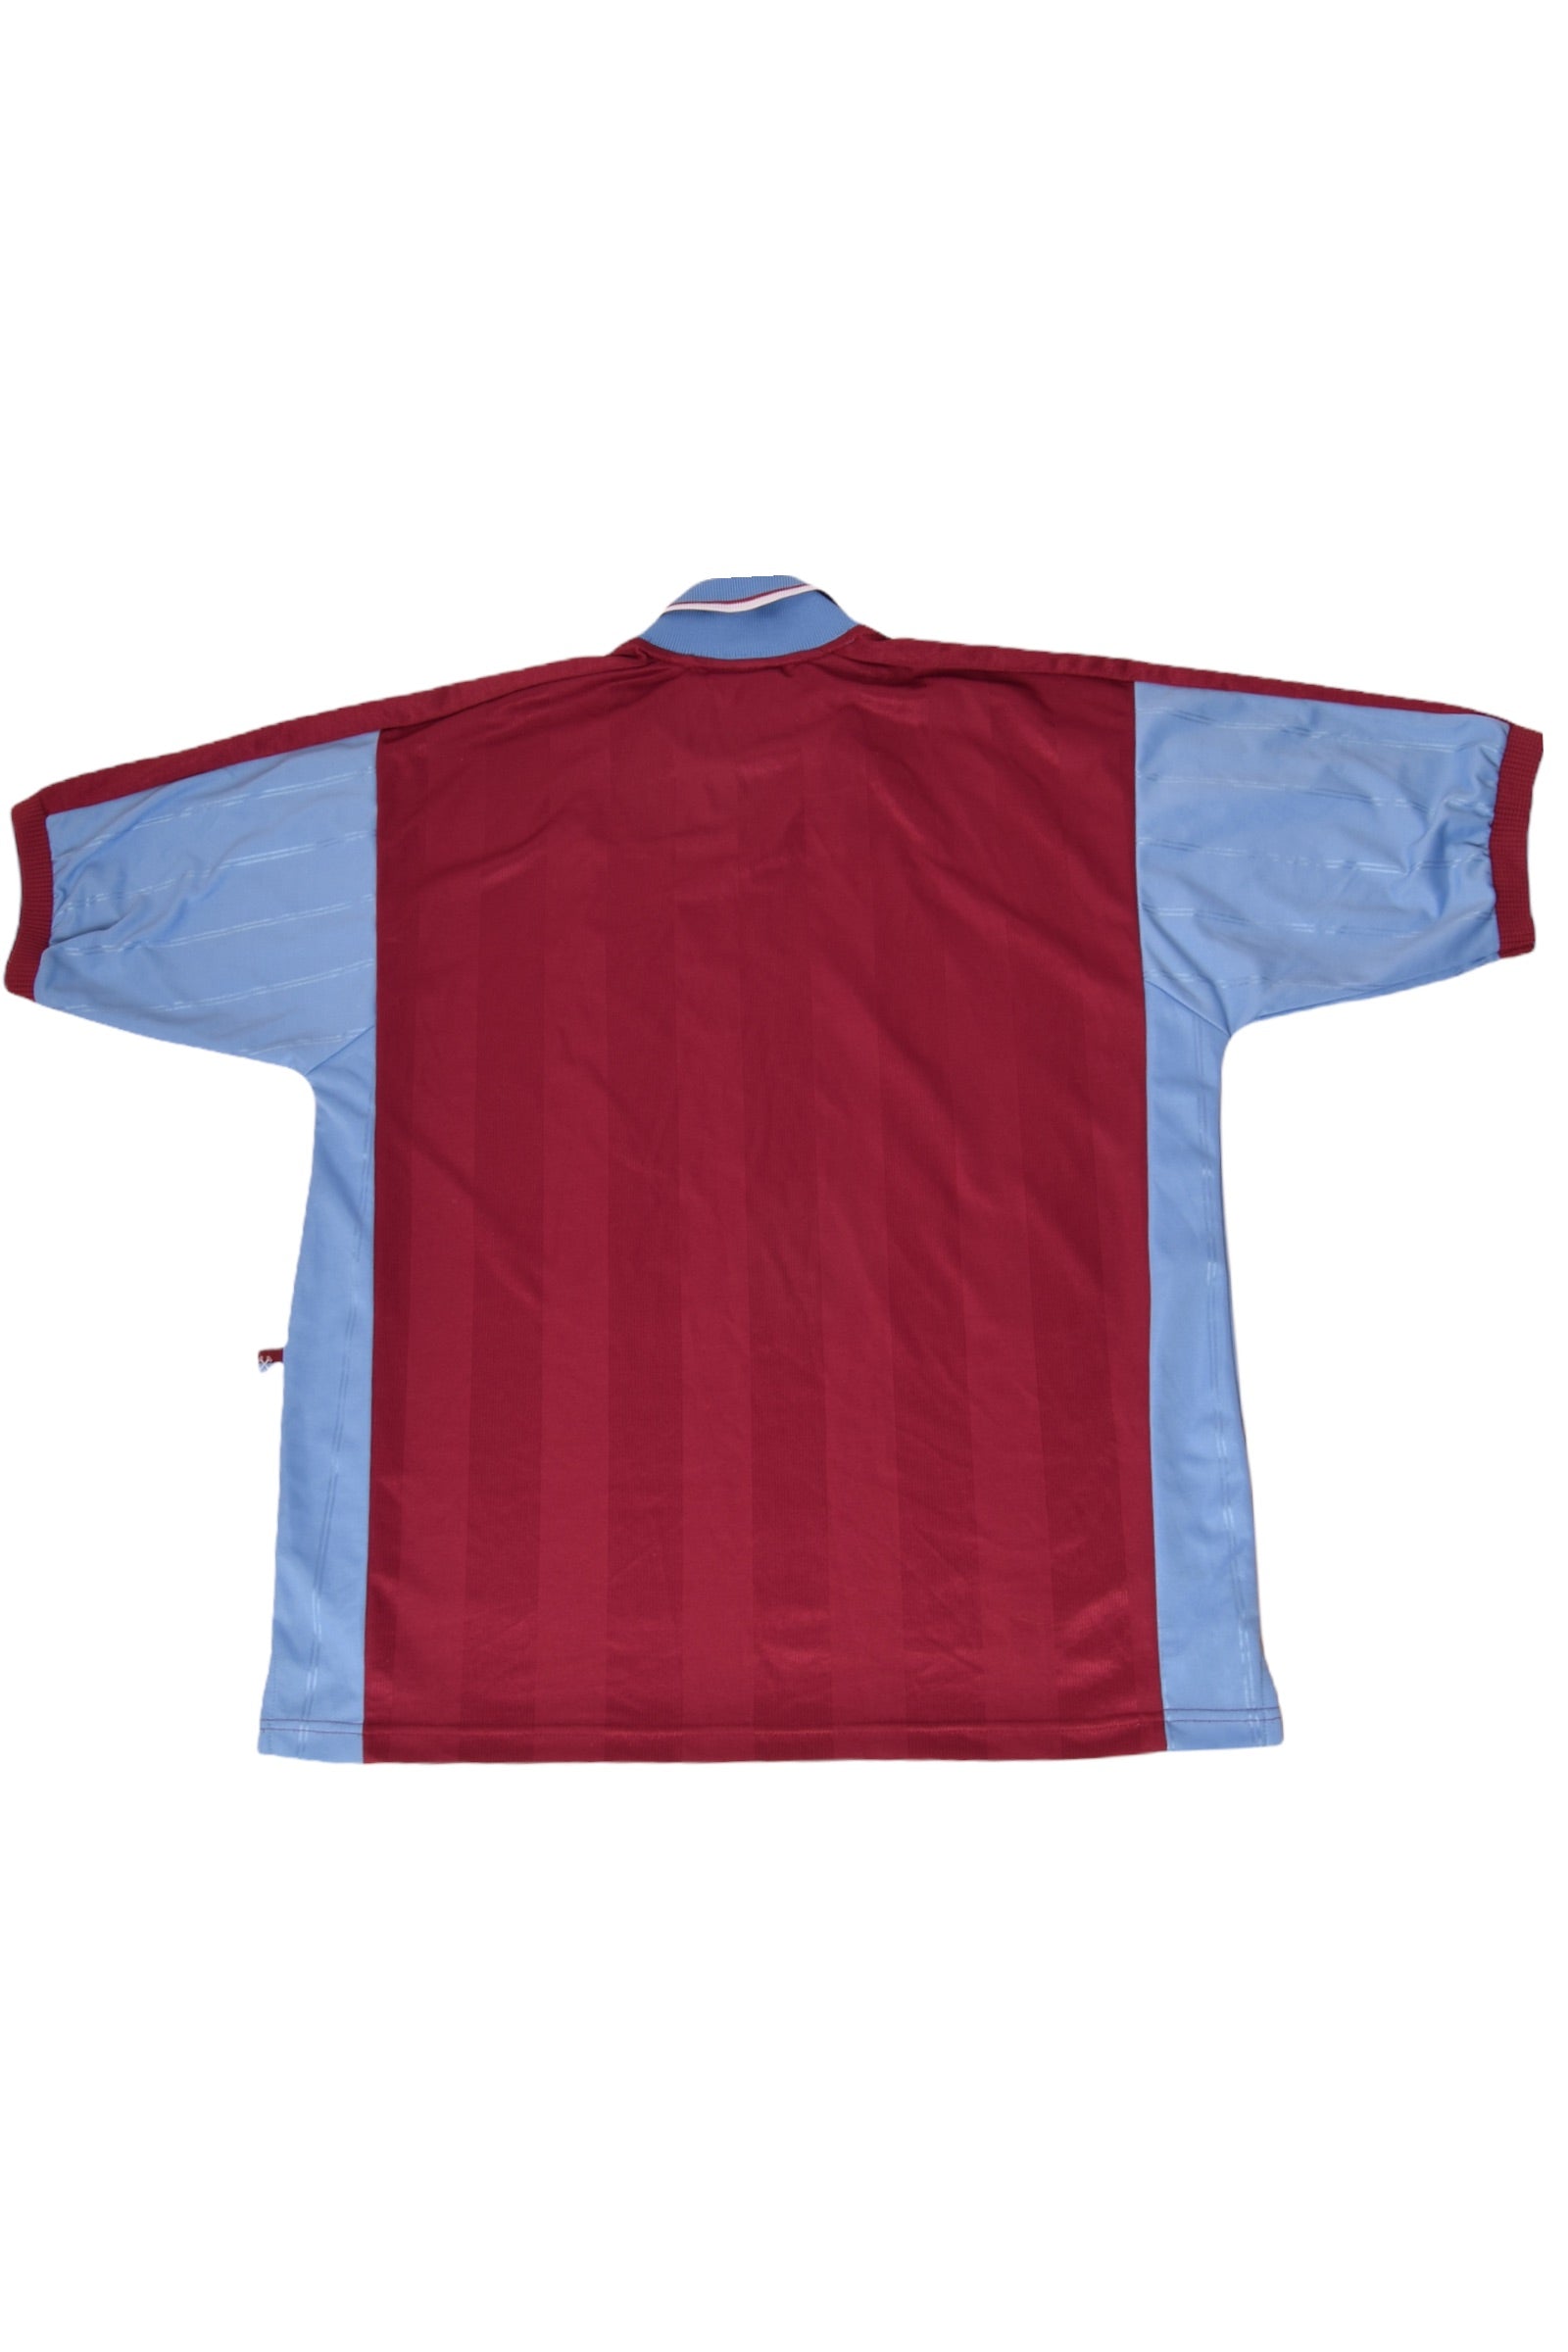 Vintage West Ham United Pony 1998-1999 Home Football Shirt Size XL